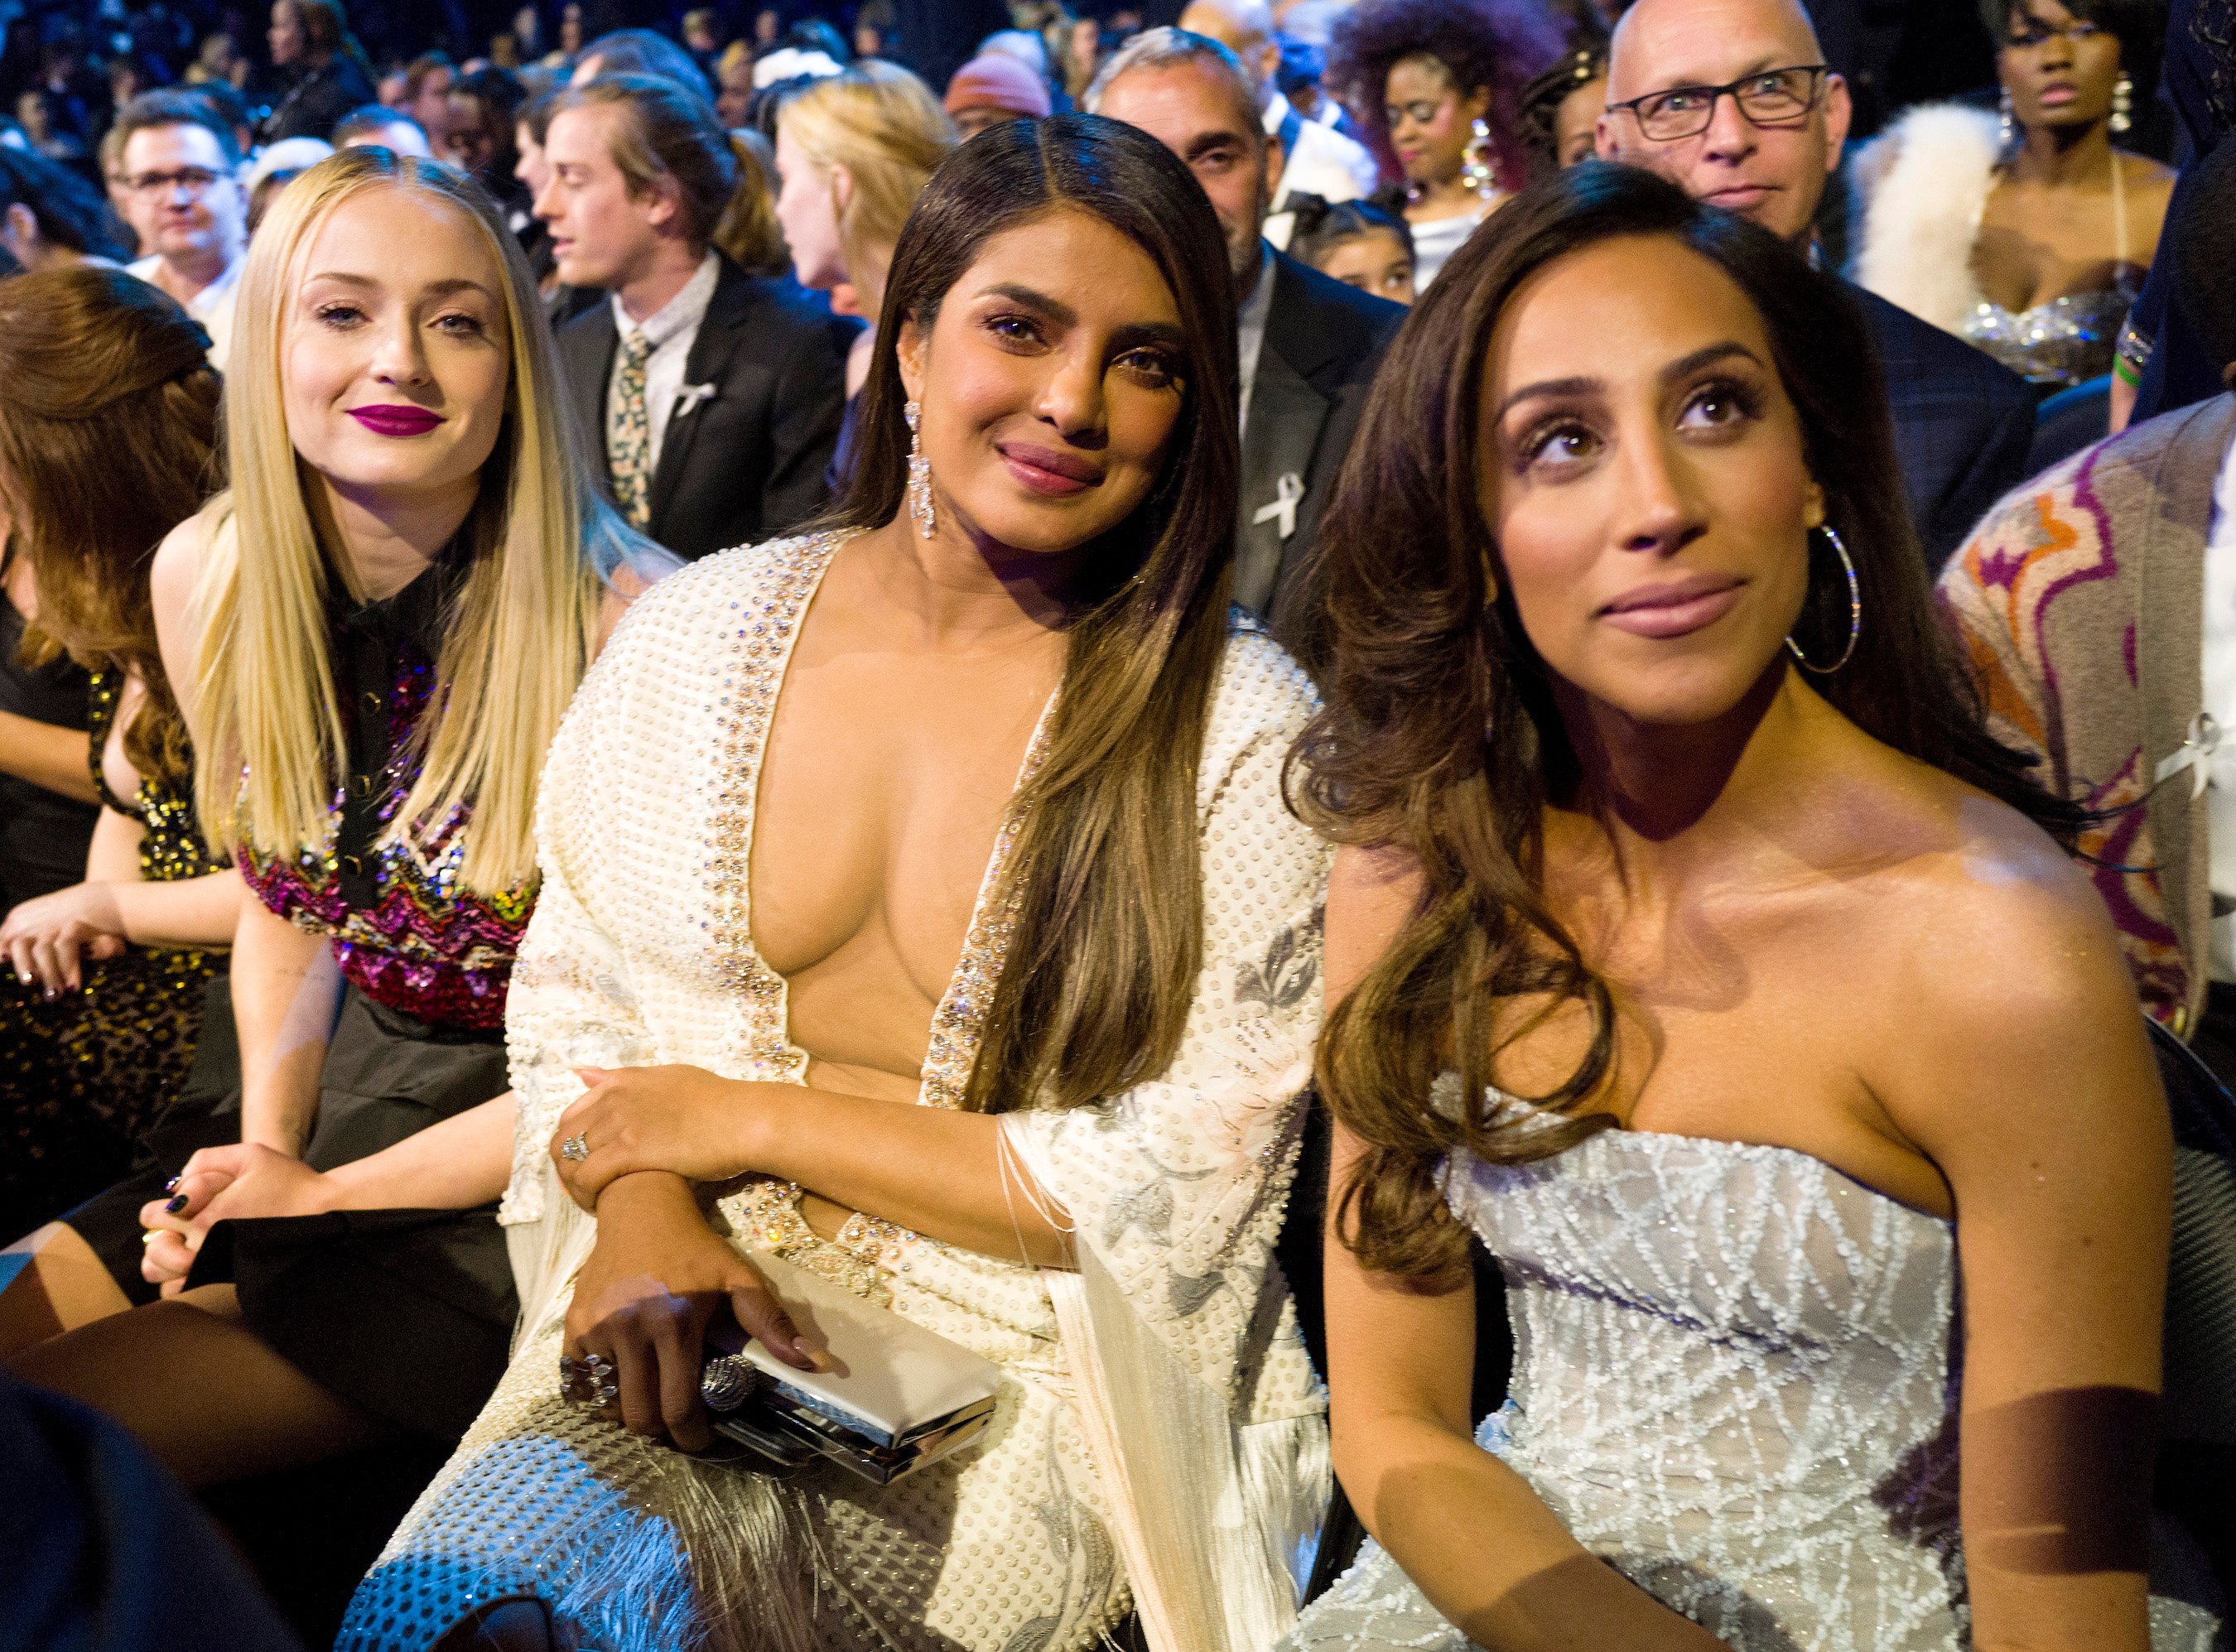 Sophie Turner, Priyanka Chopra, and Danielle Jonas attend the 62nd Annual GRAMMY Awards